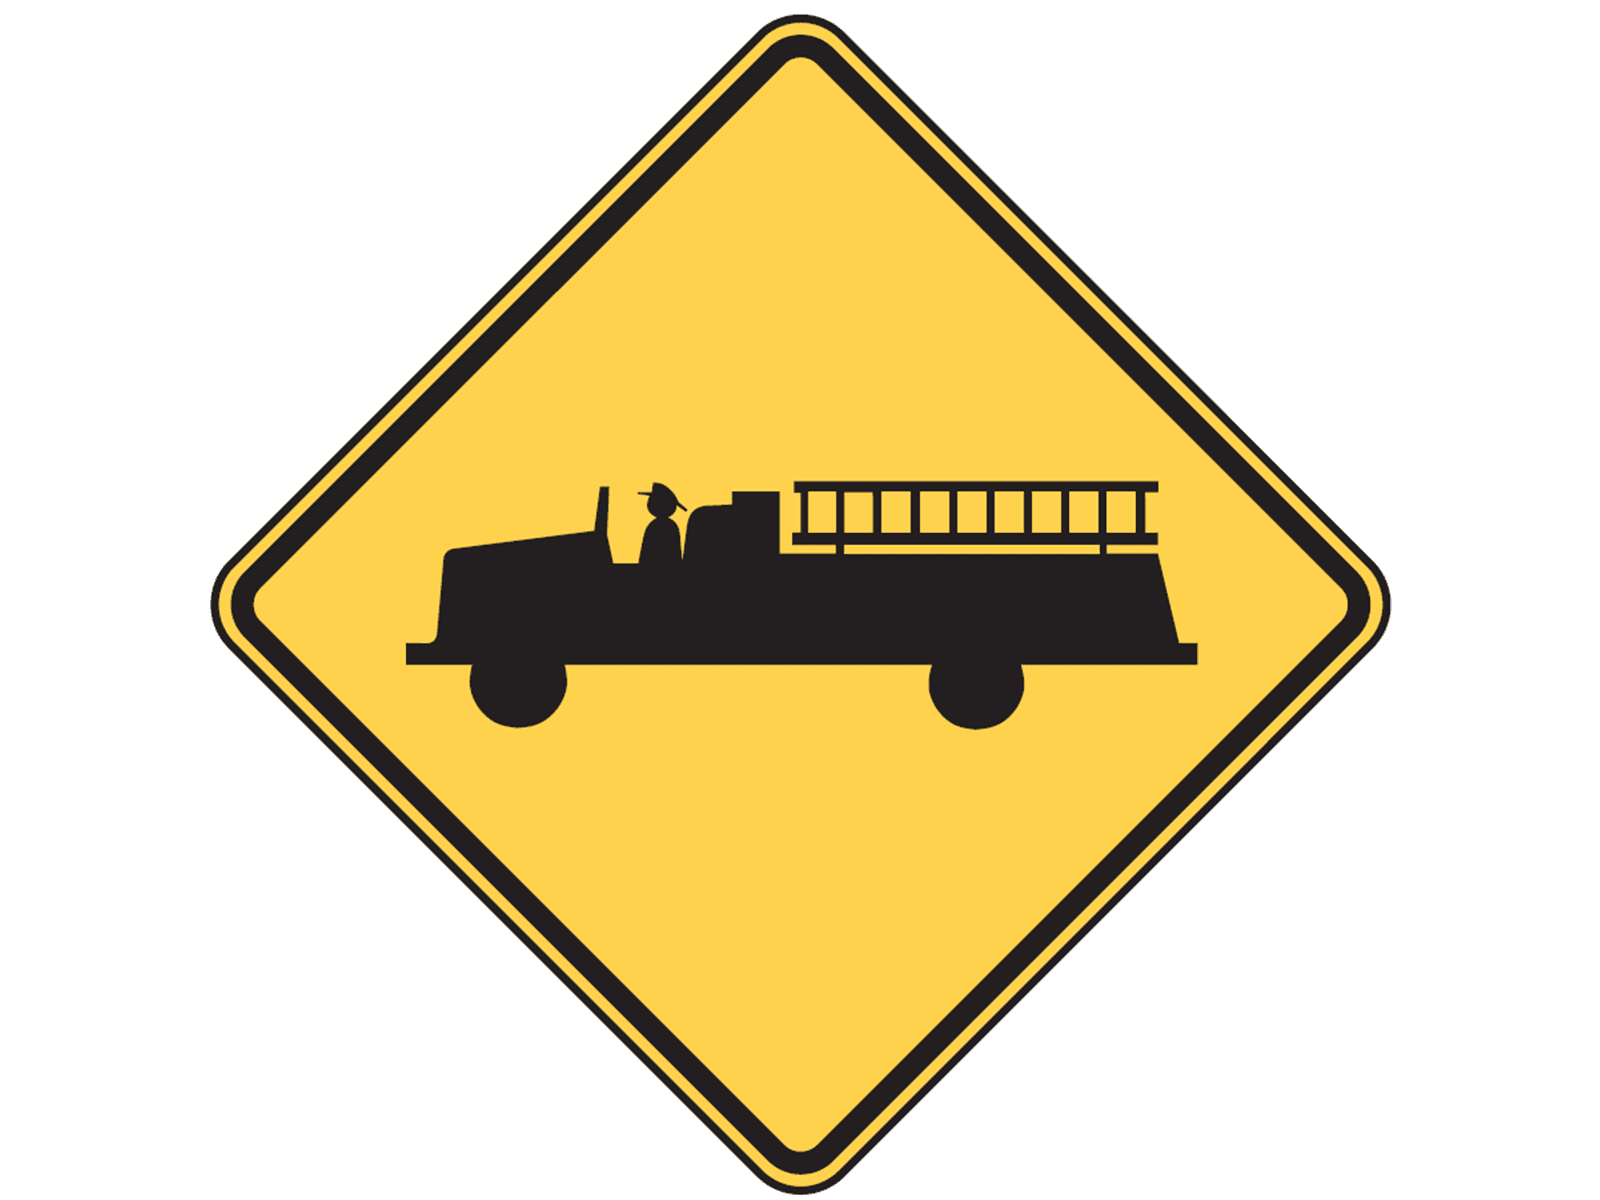 Emergency Vehicle W11-8 - W11: Vehicles